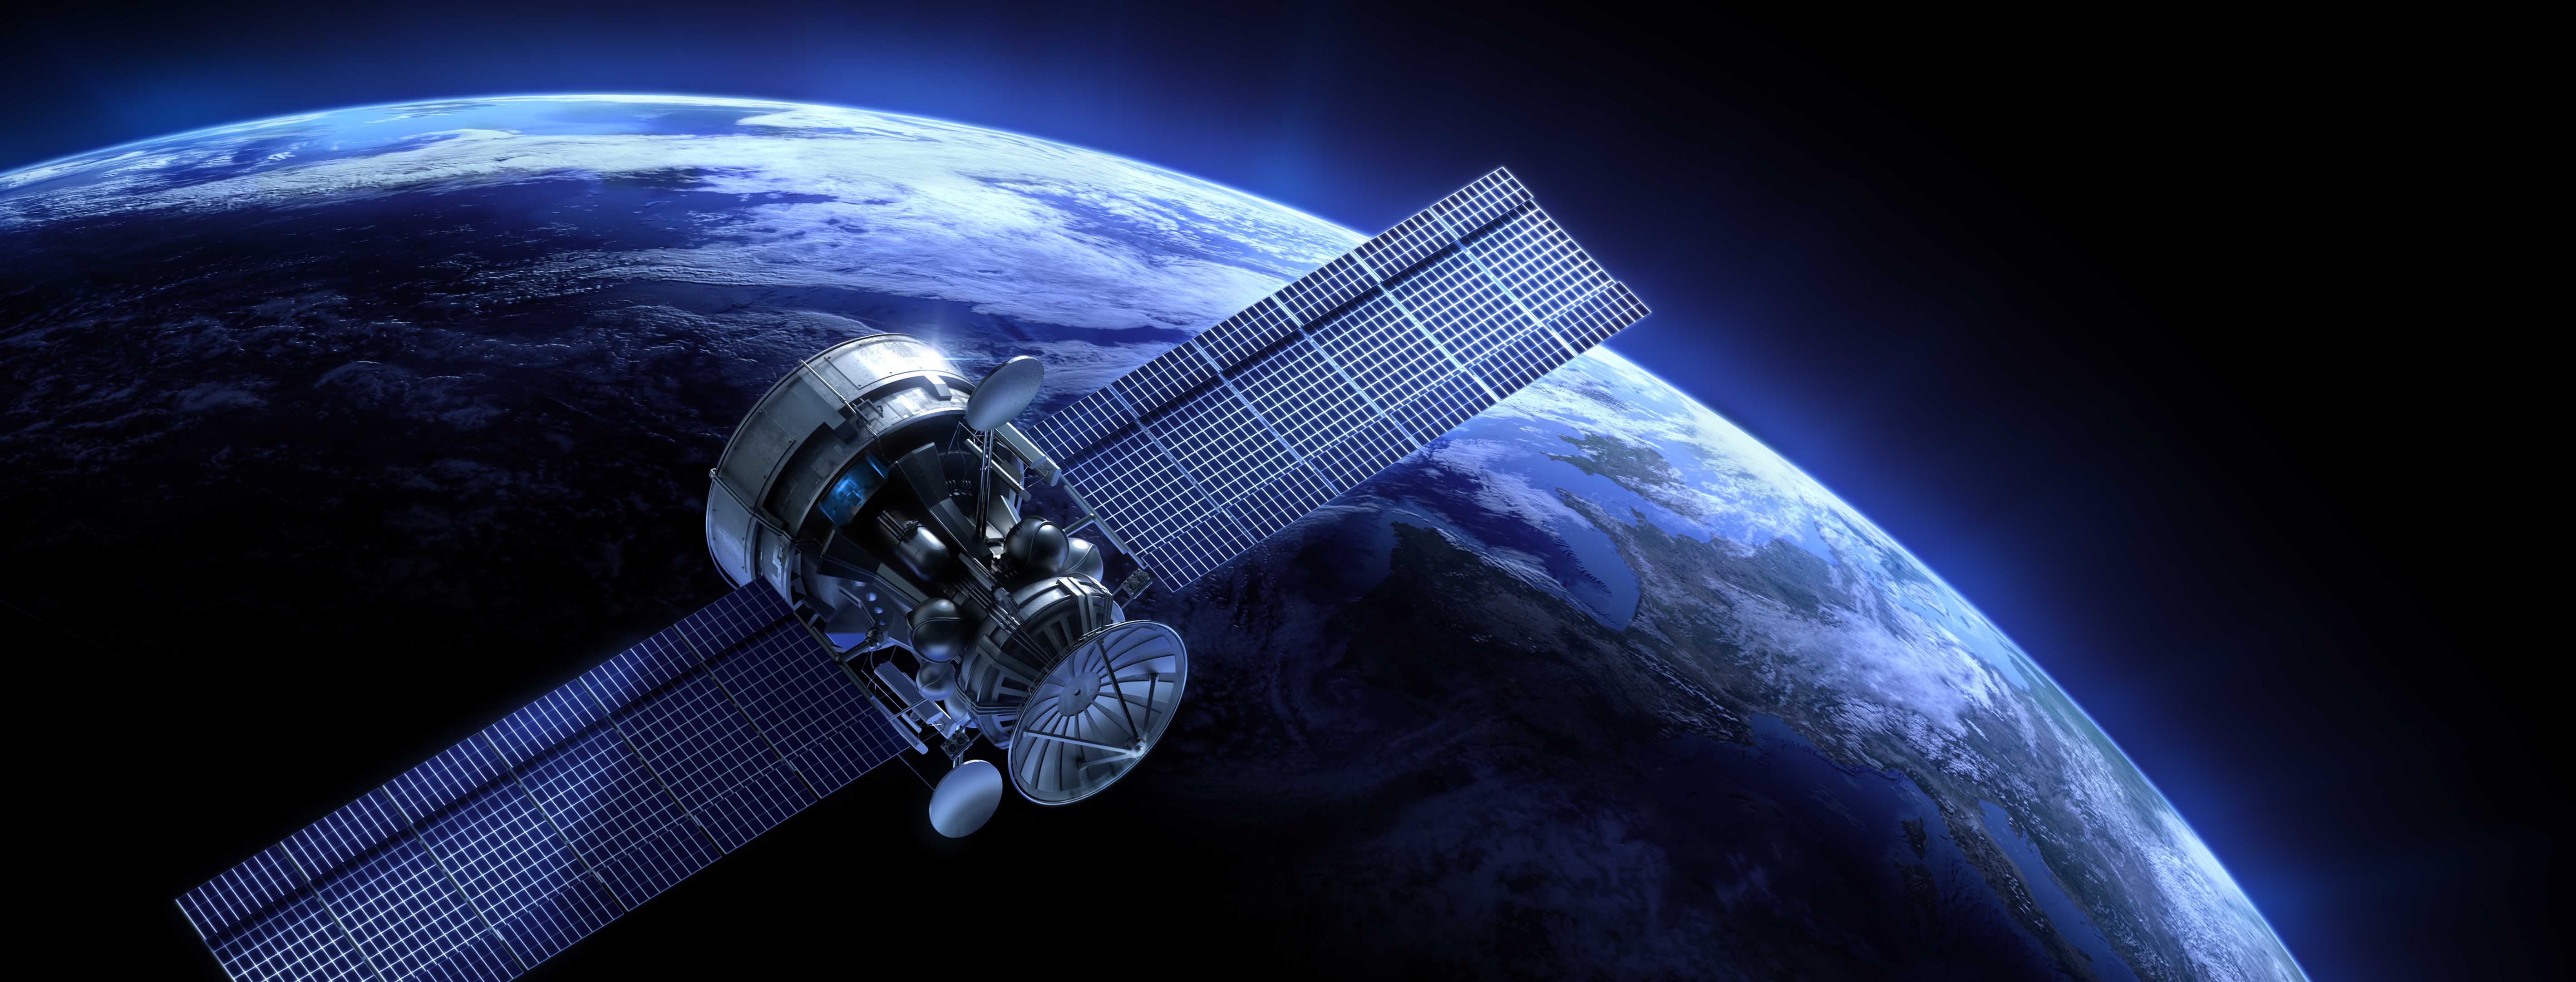 low Earth orbit satellites